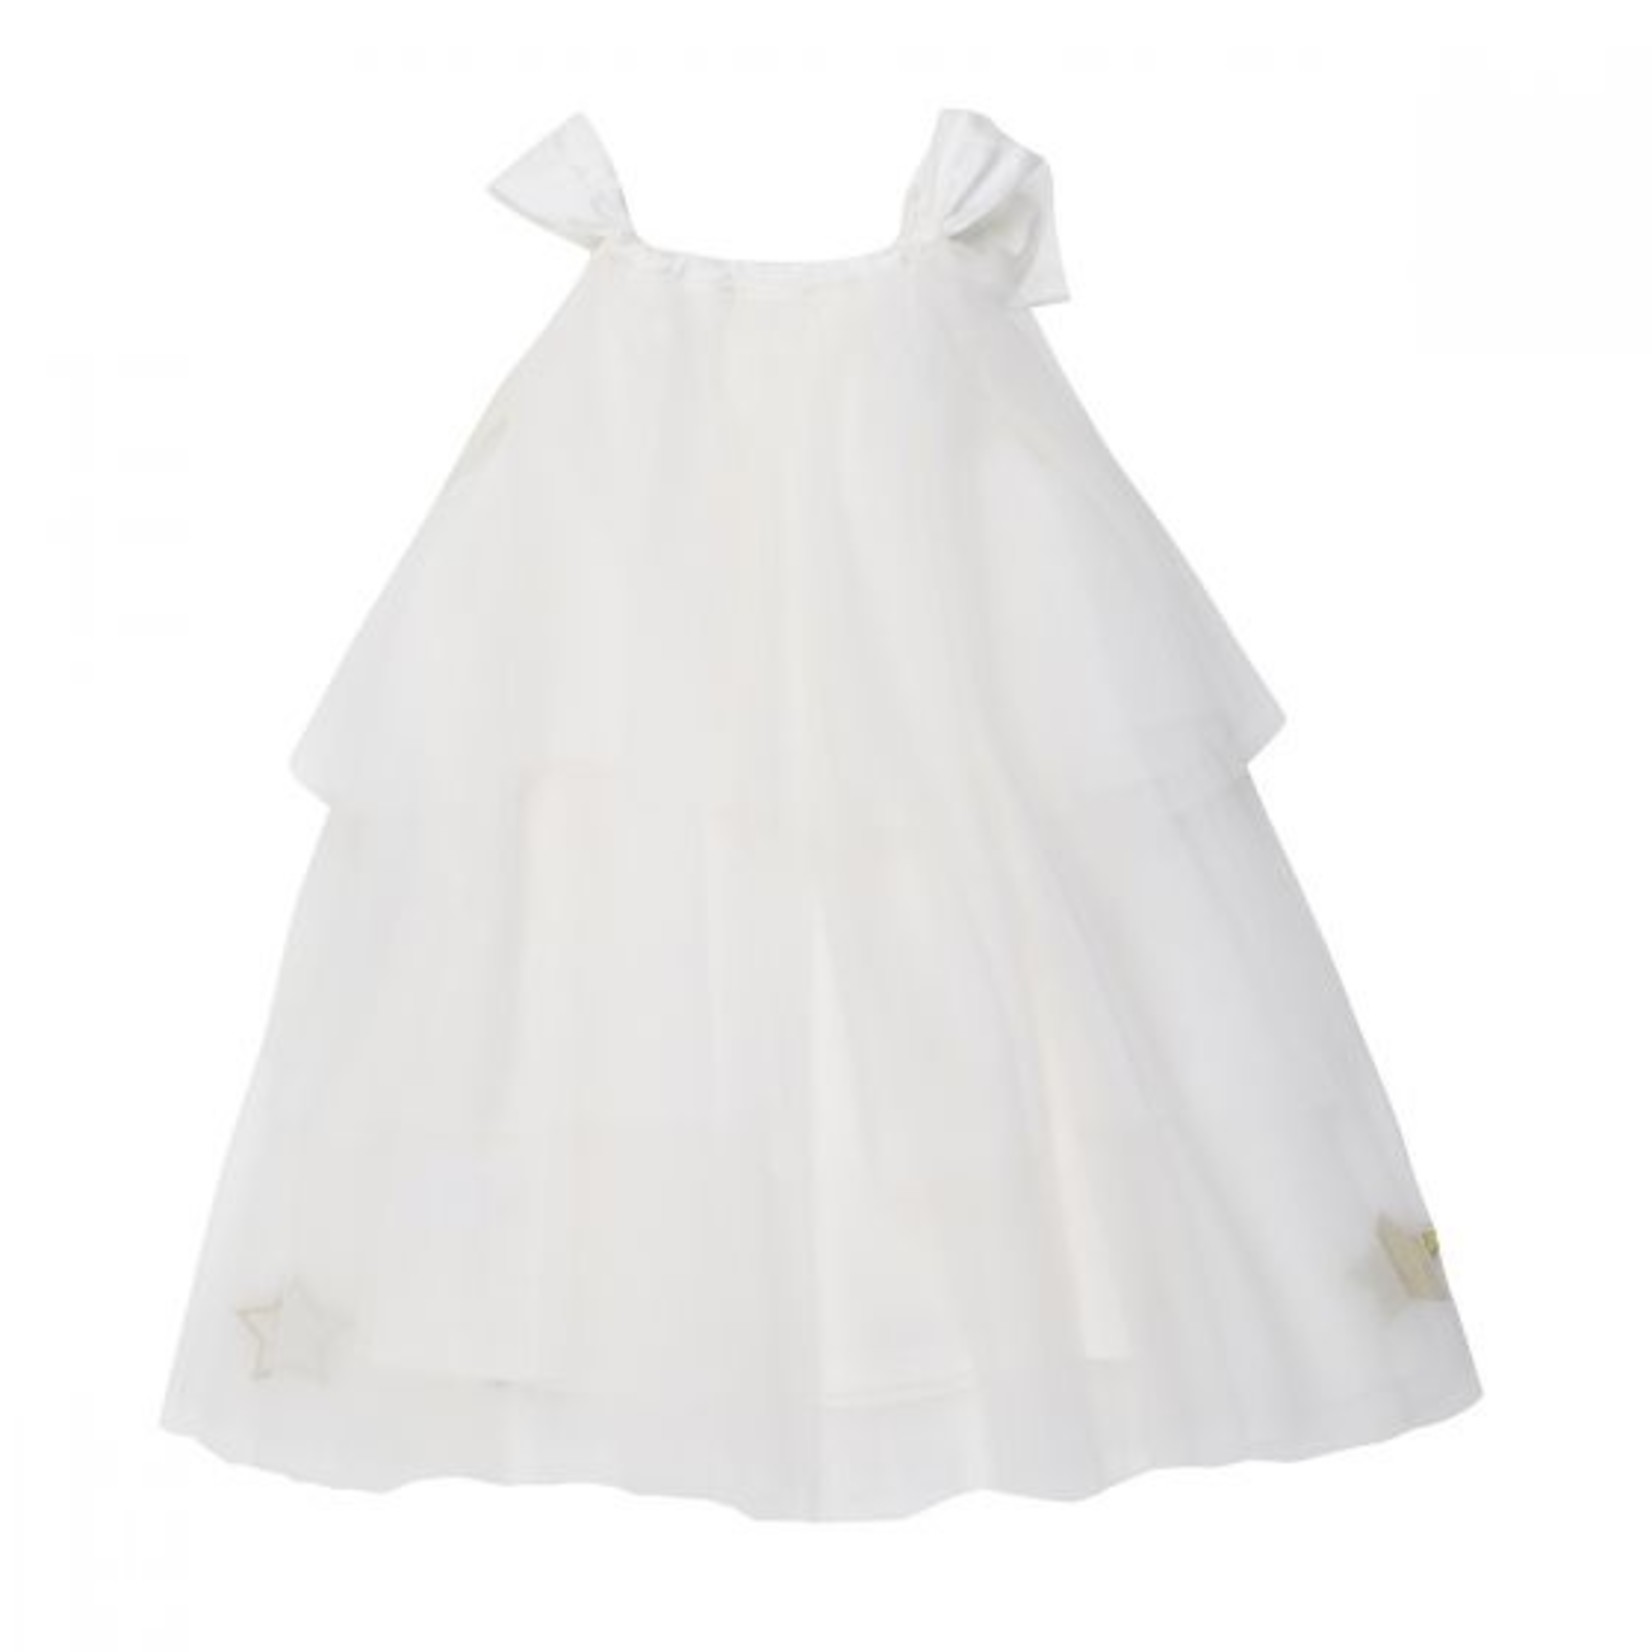 Minihaha White Star Dress